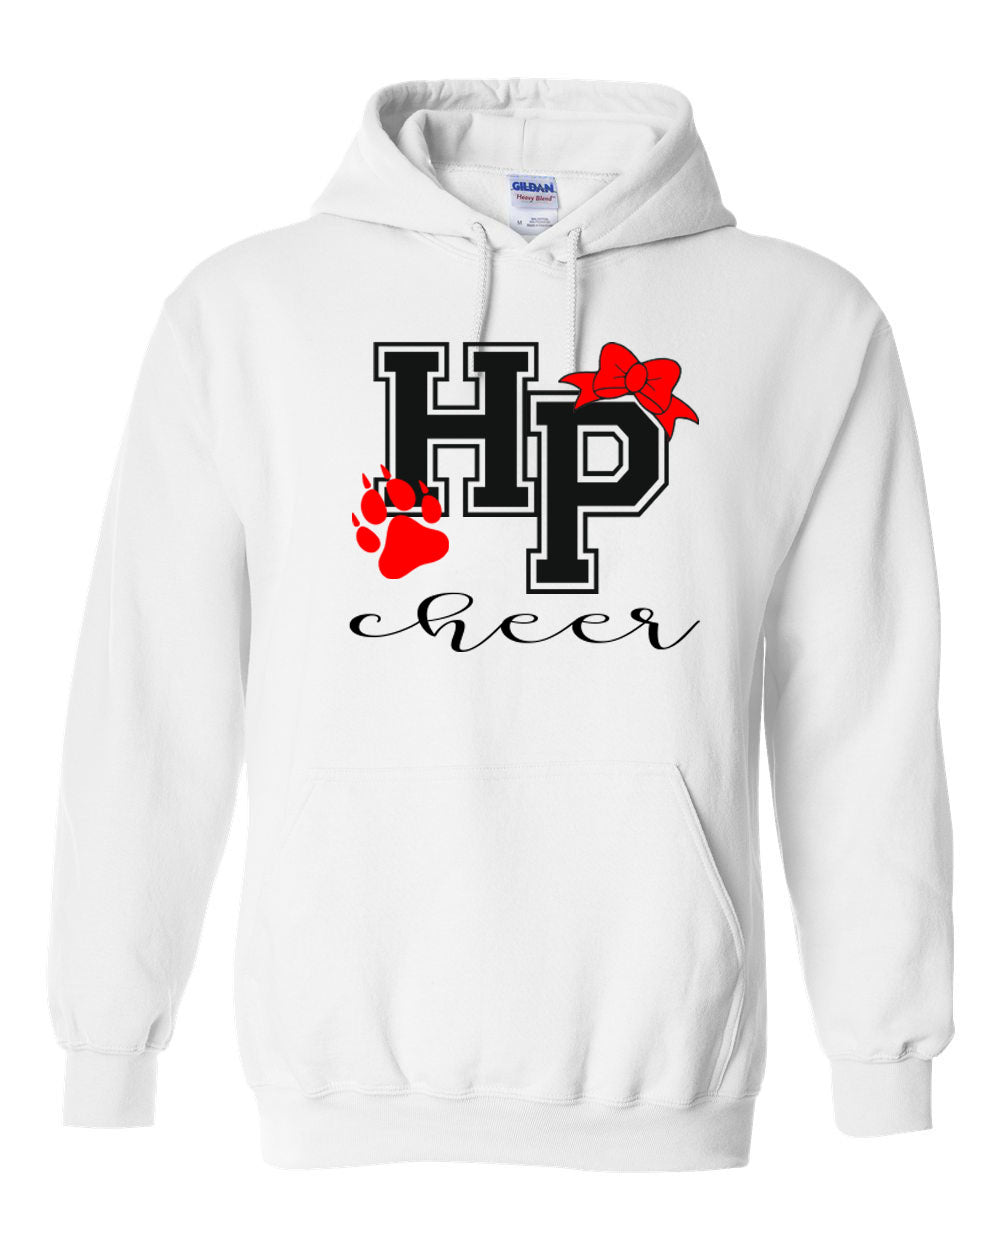 High Point cheer Design 3 Hooded Sweatshirt